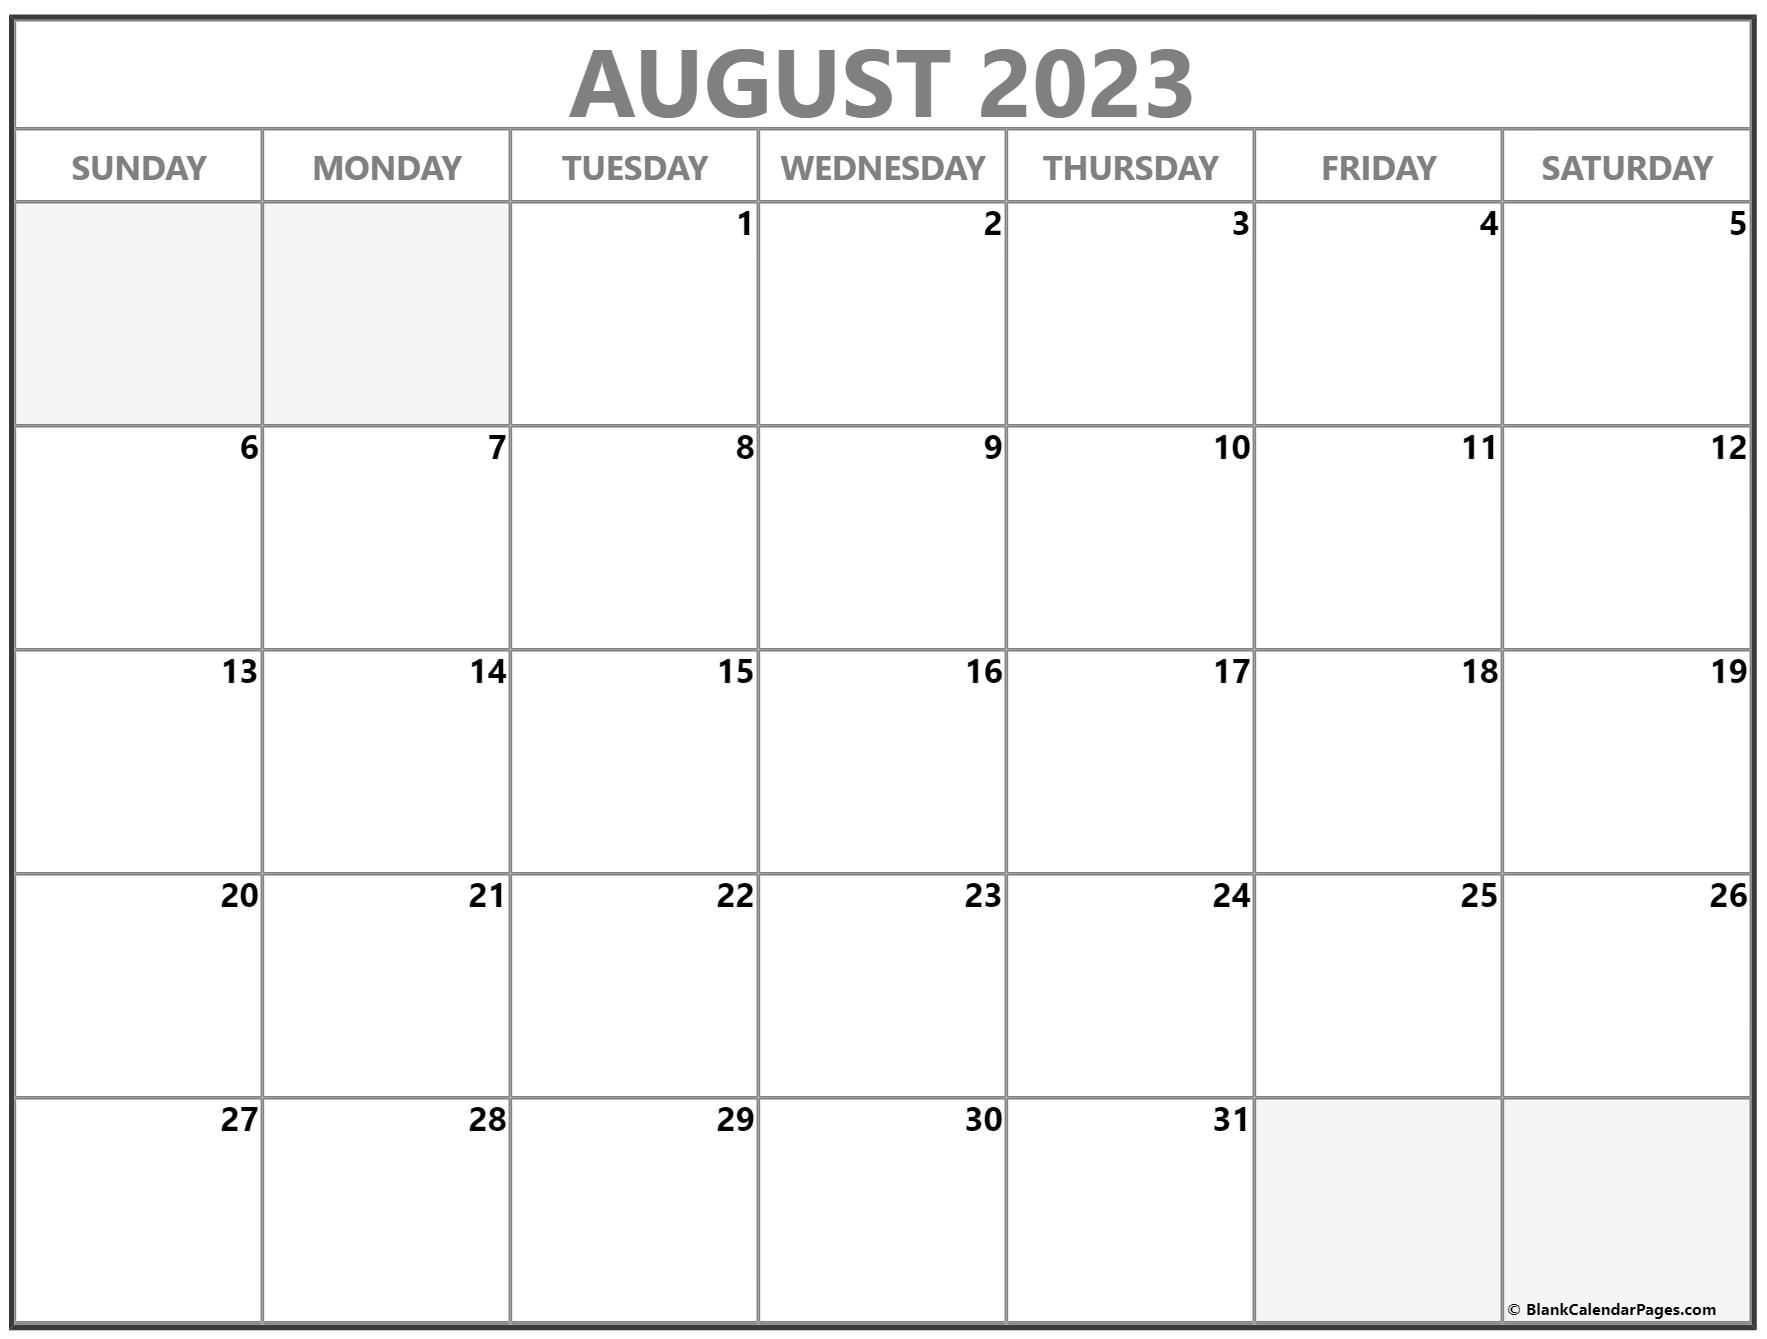 august-2023-printable-calendar-2023-holidays